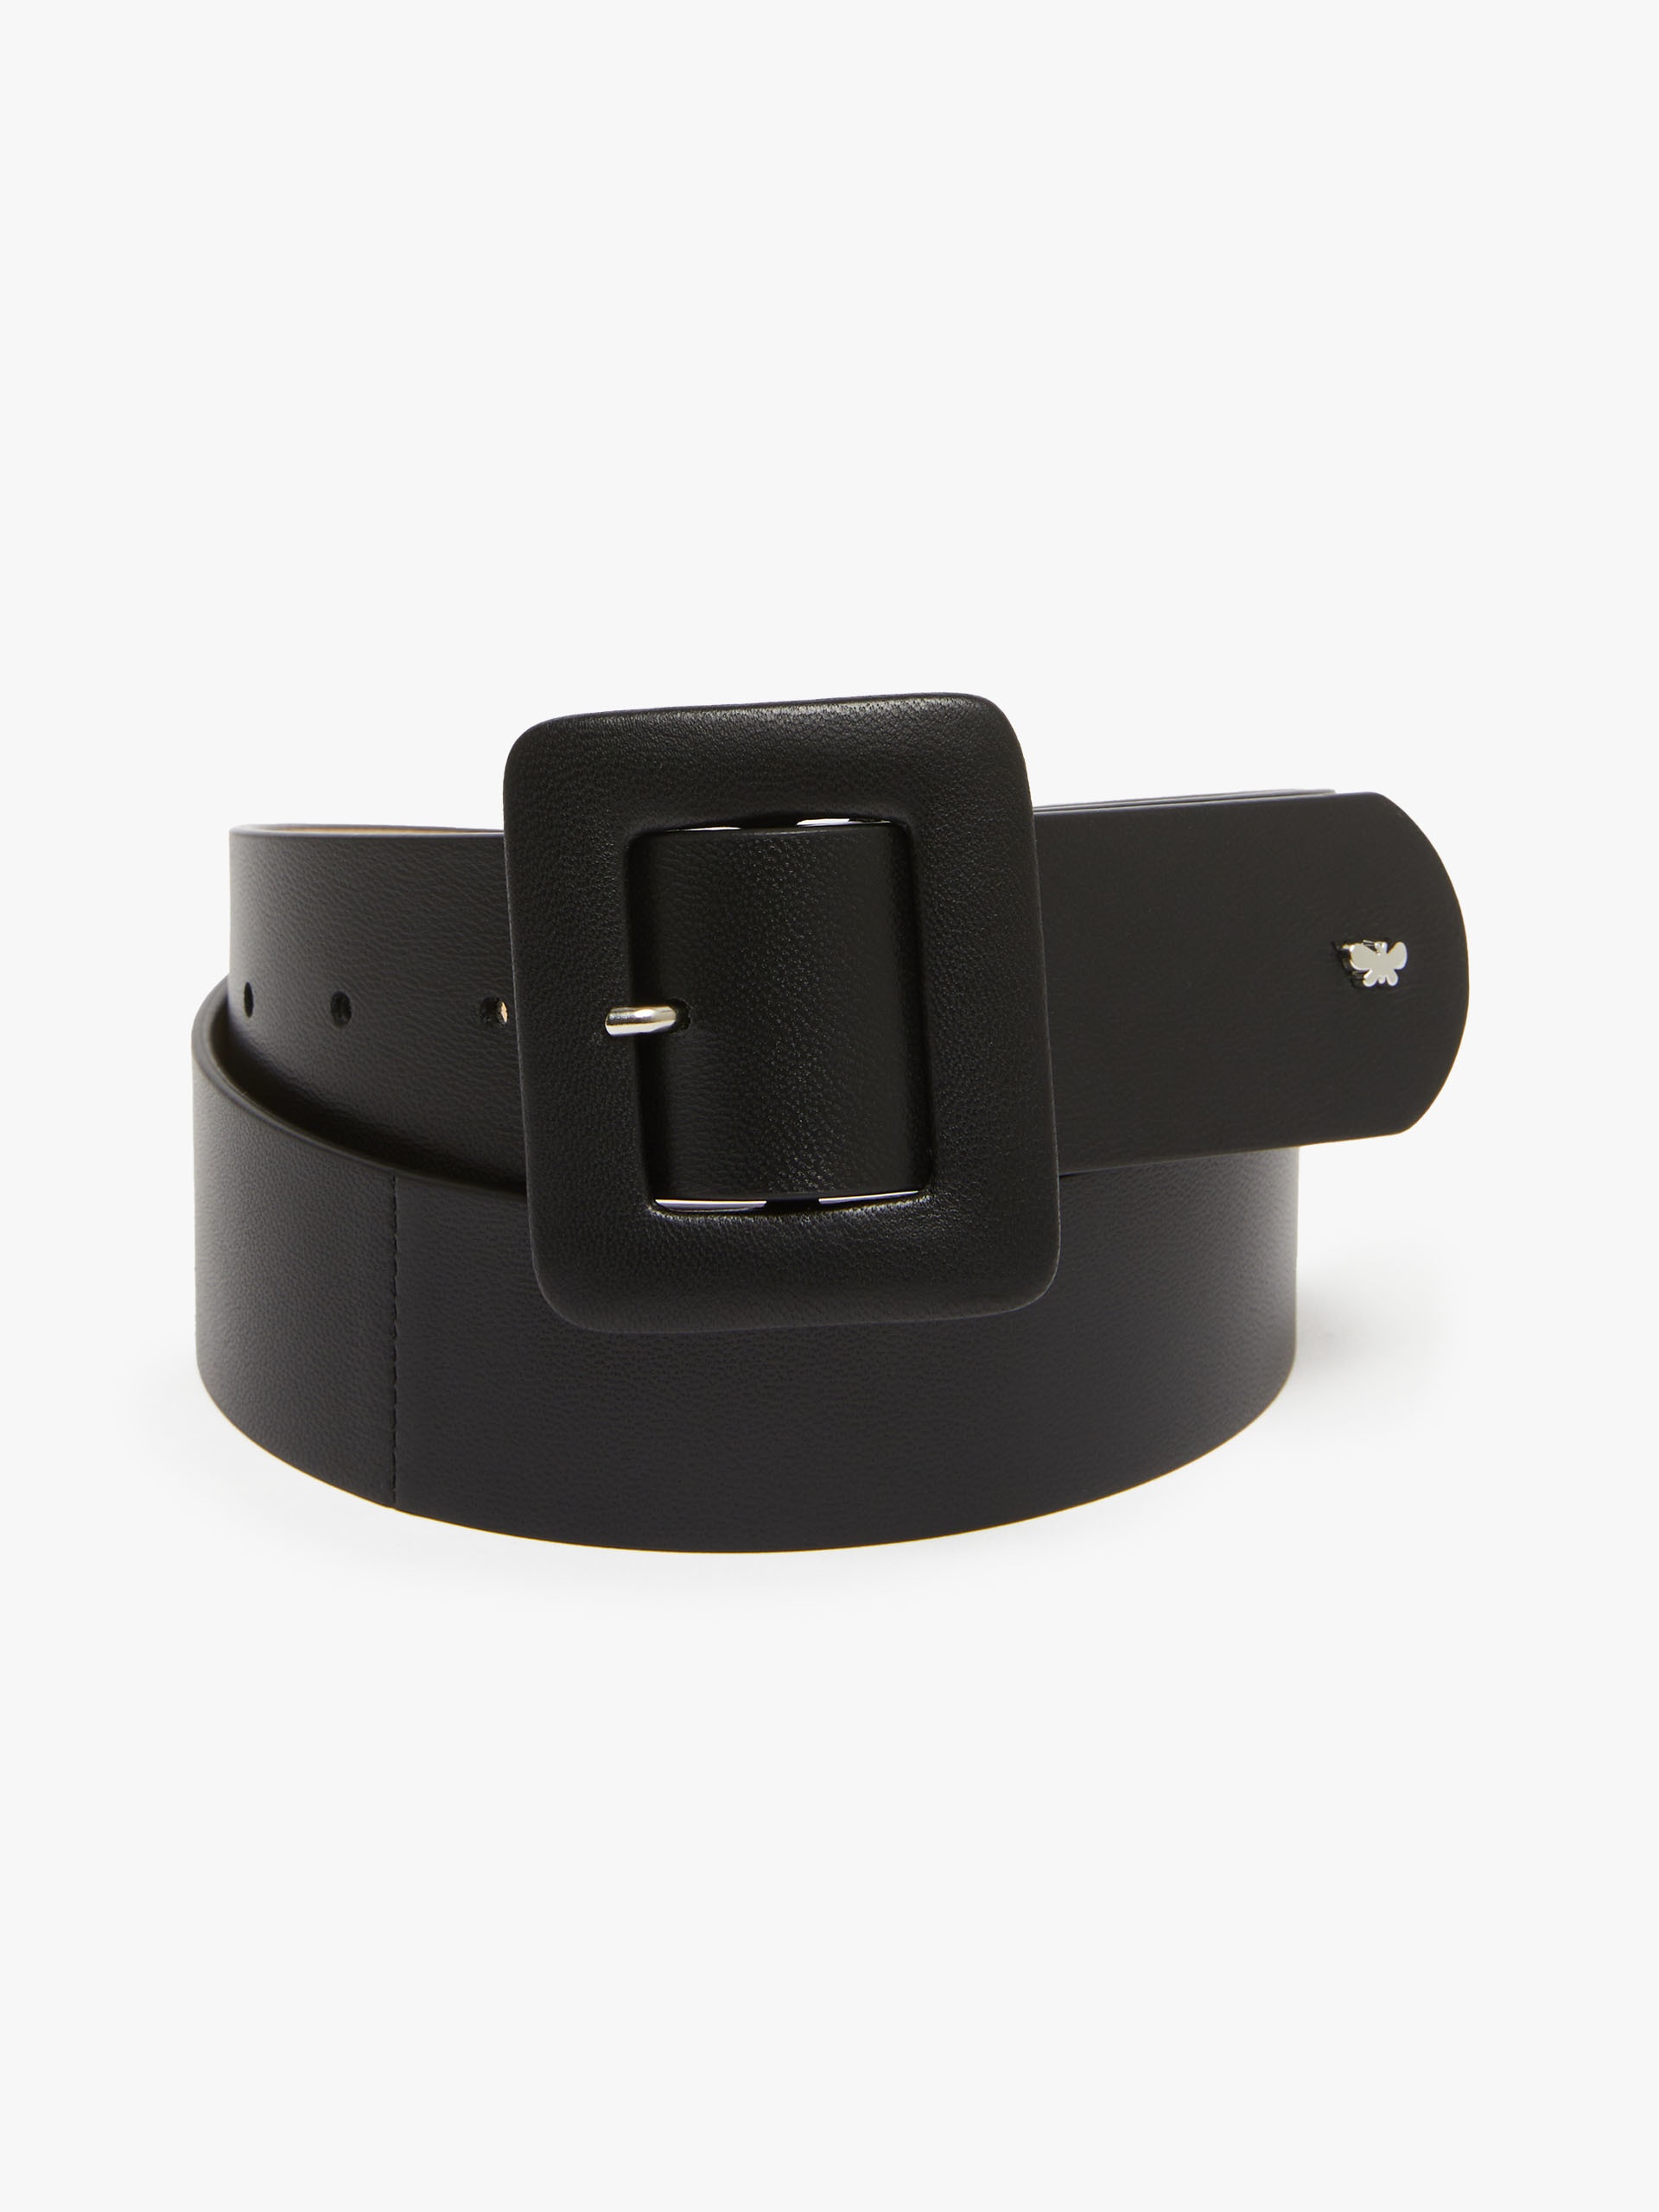 BRIO Nappa leather belt - 1